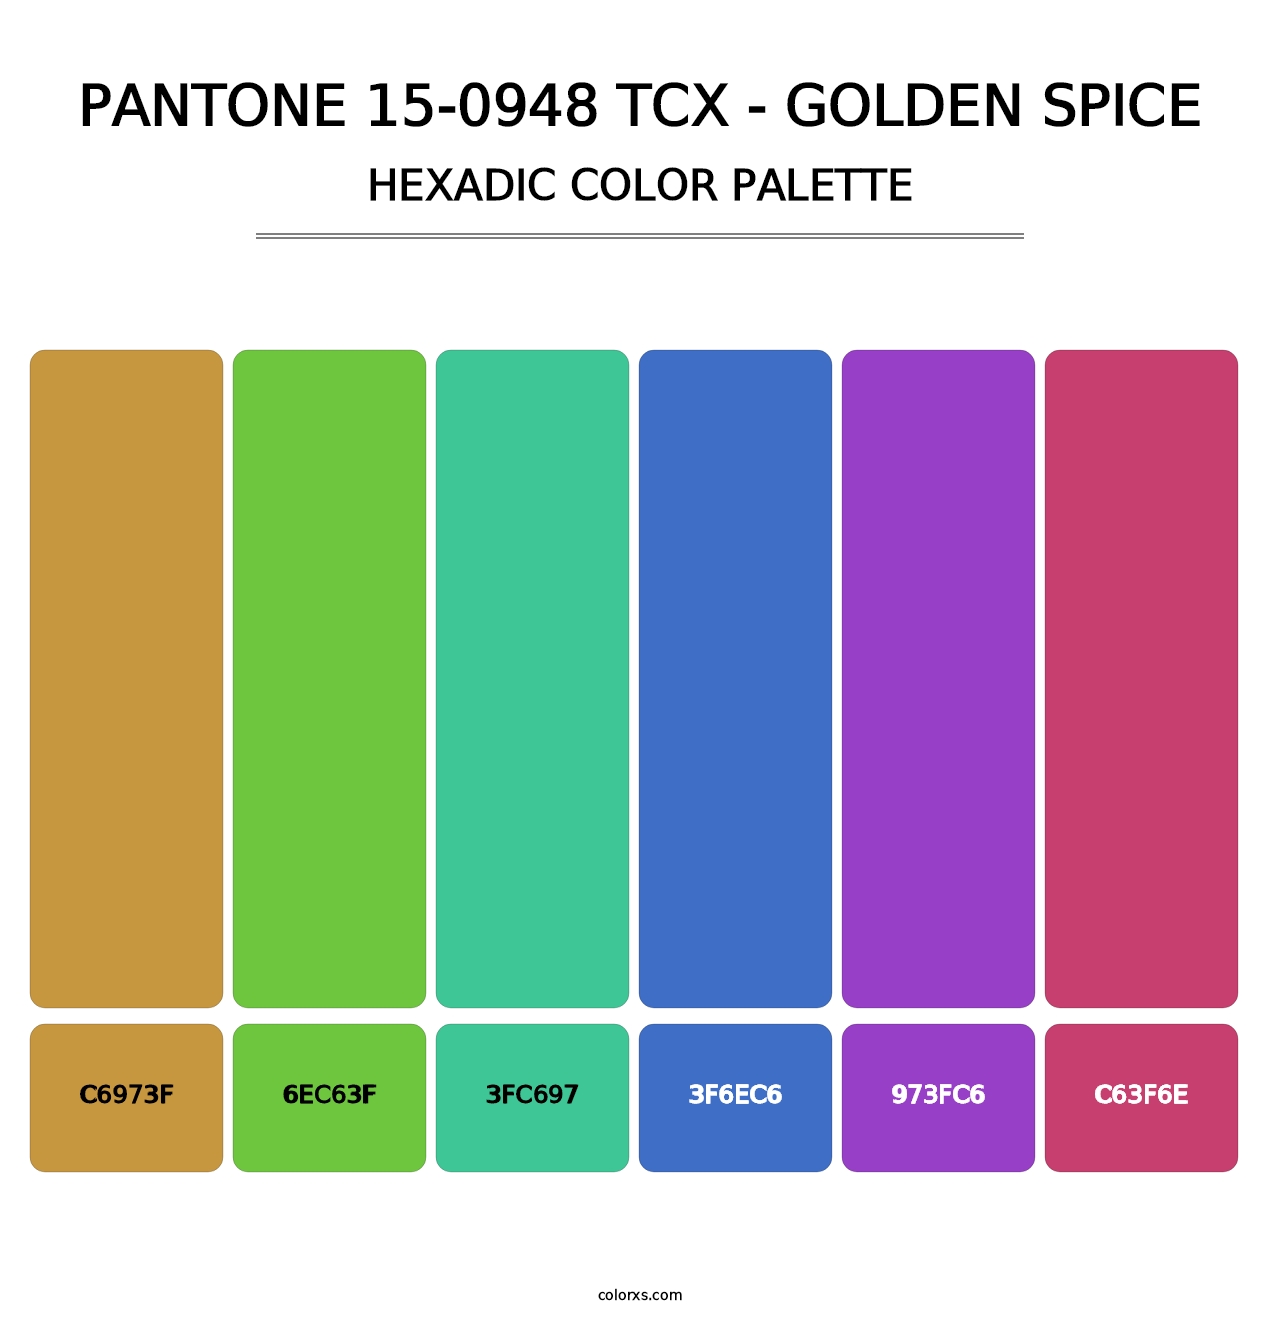 PANTONE 15-0948 TCX - Golden Spice - Hexadic Color Palette